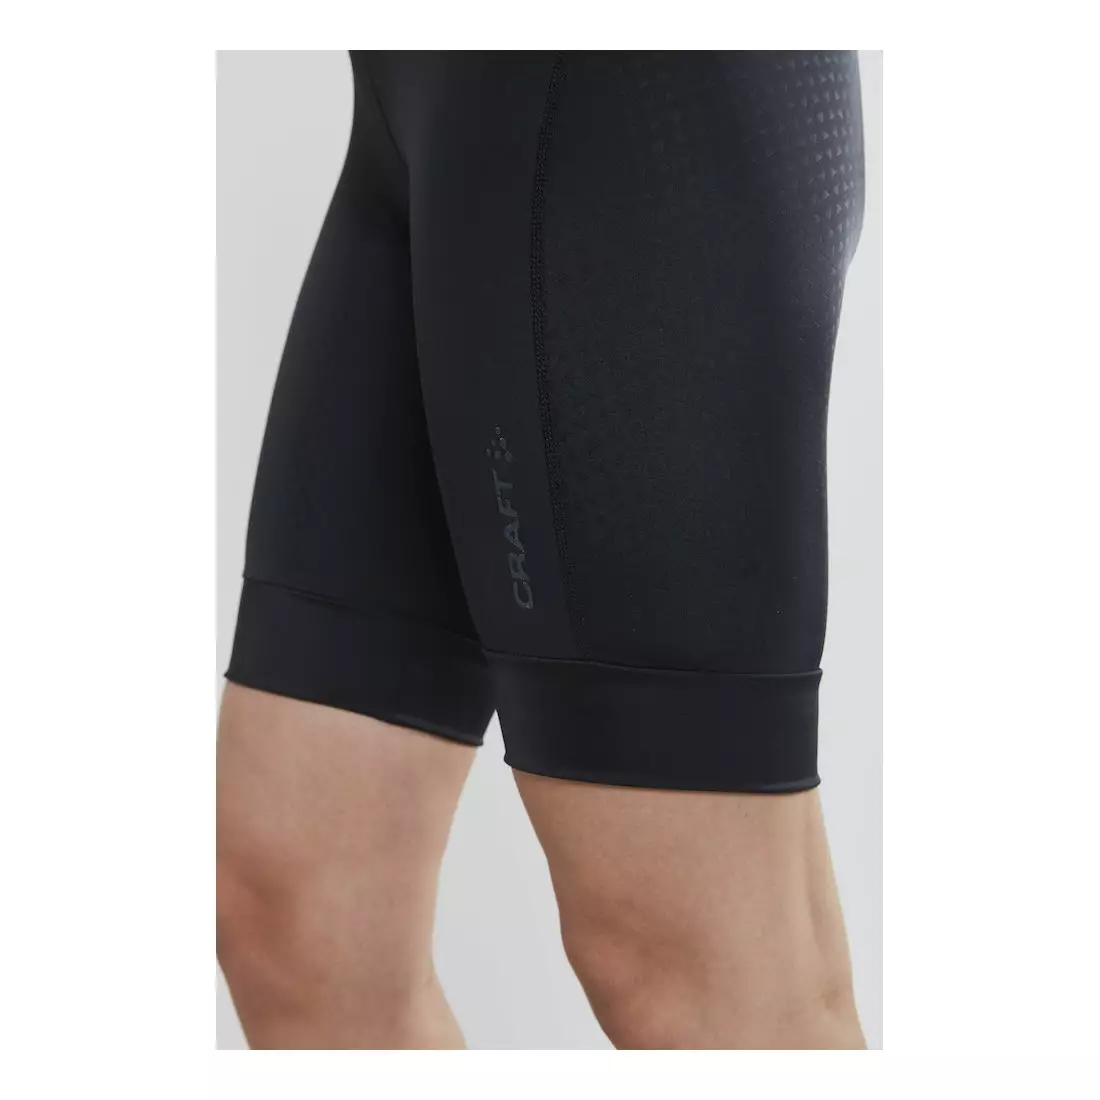 CRAFT RISE women's cycling shorts, black 1906078-999999